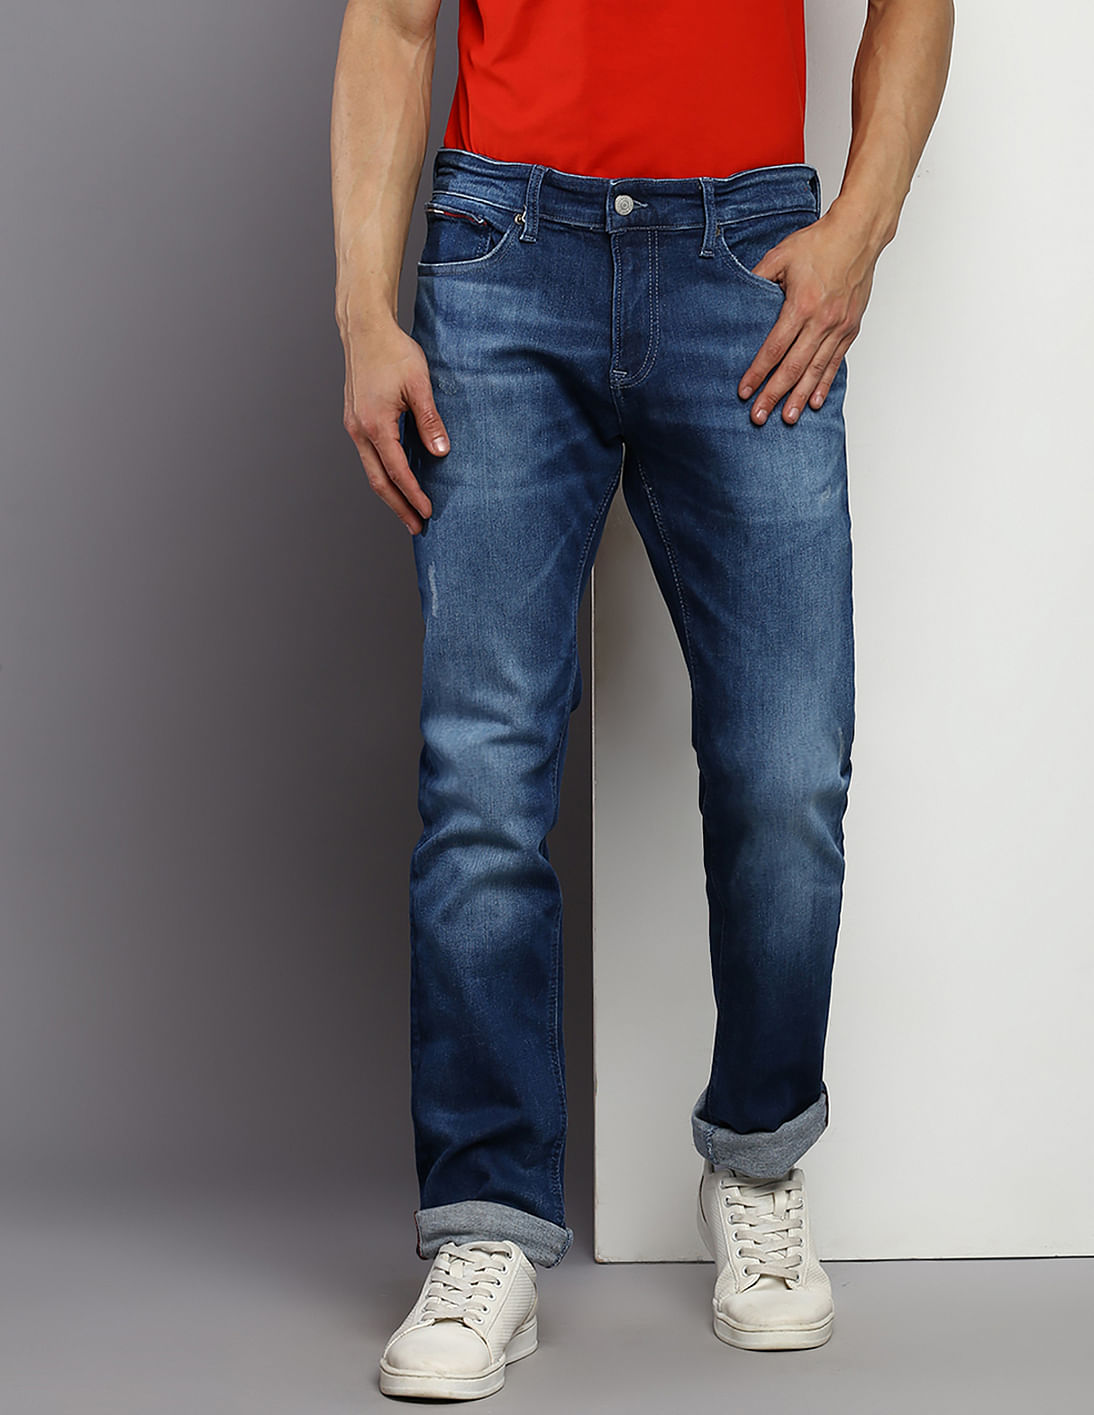 Slim Dark Tommy Jeans Wash Hilfiger Fit Buy Scanton